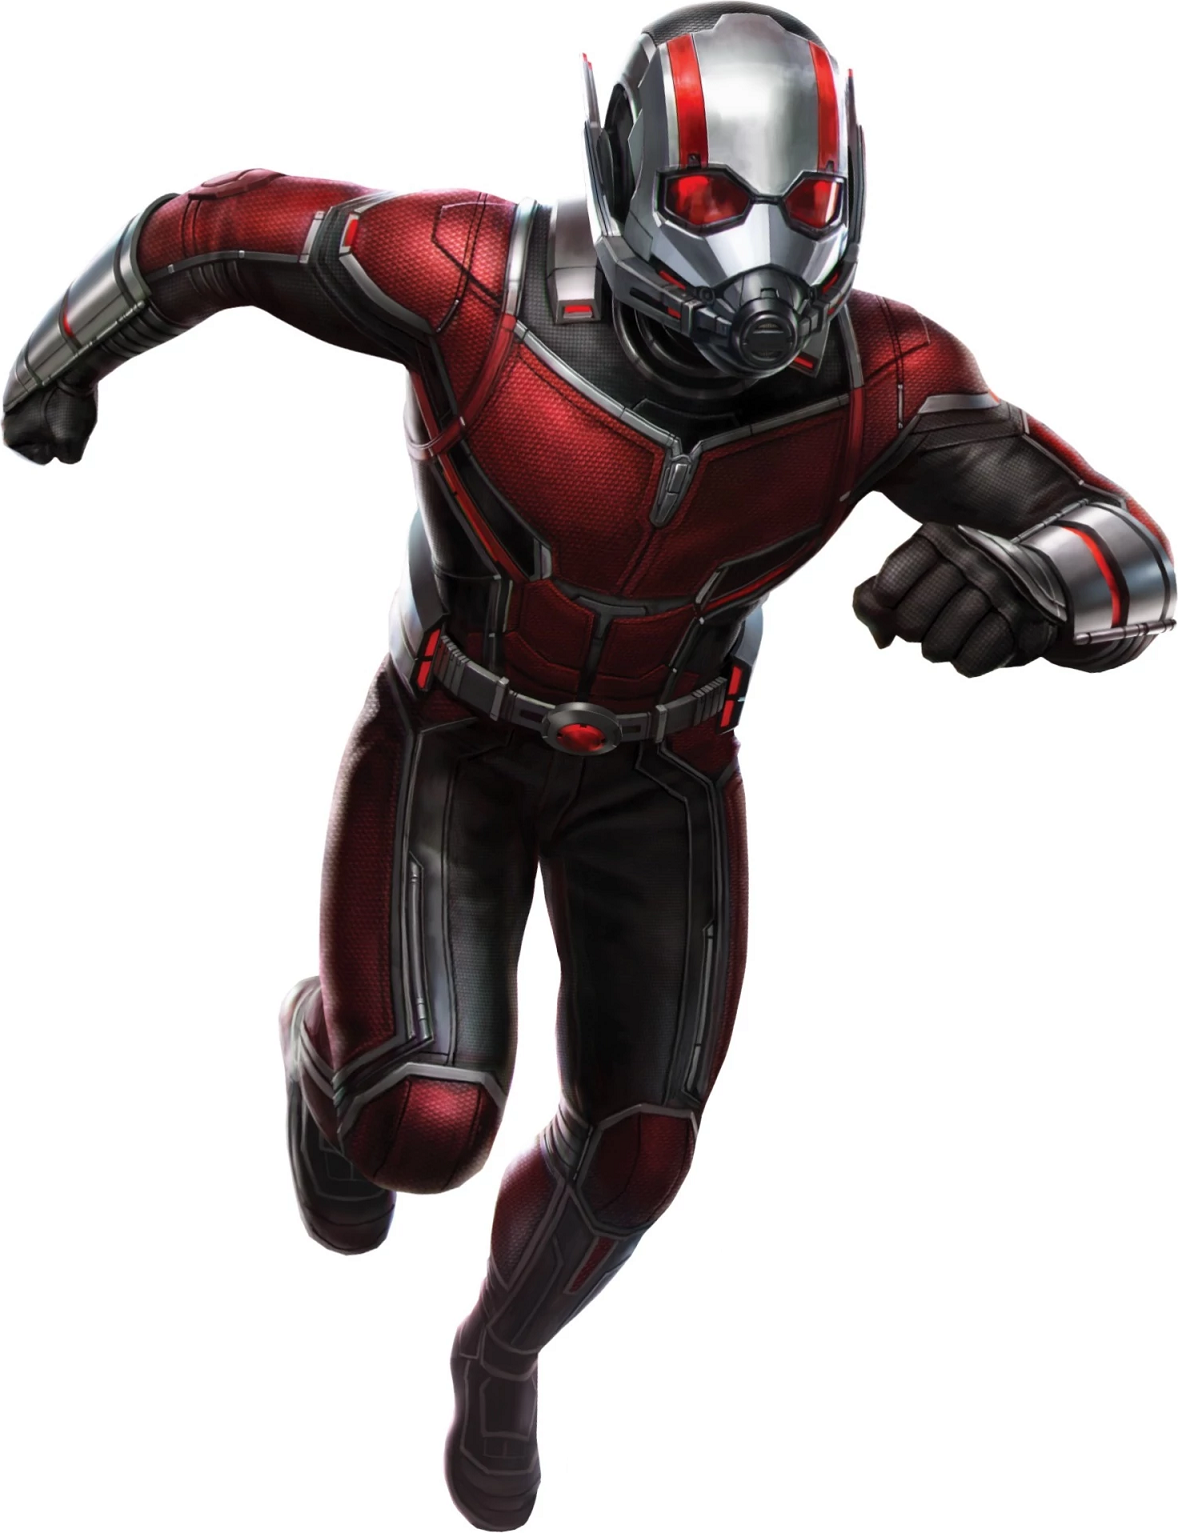 Ant-Man - Wikipedia